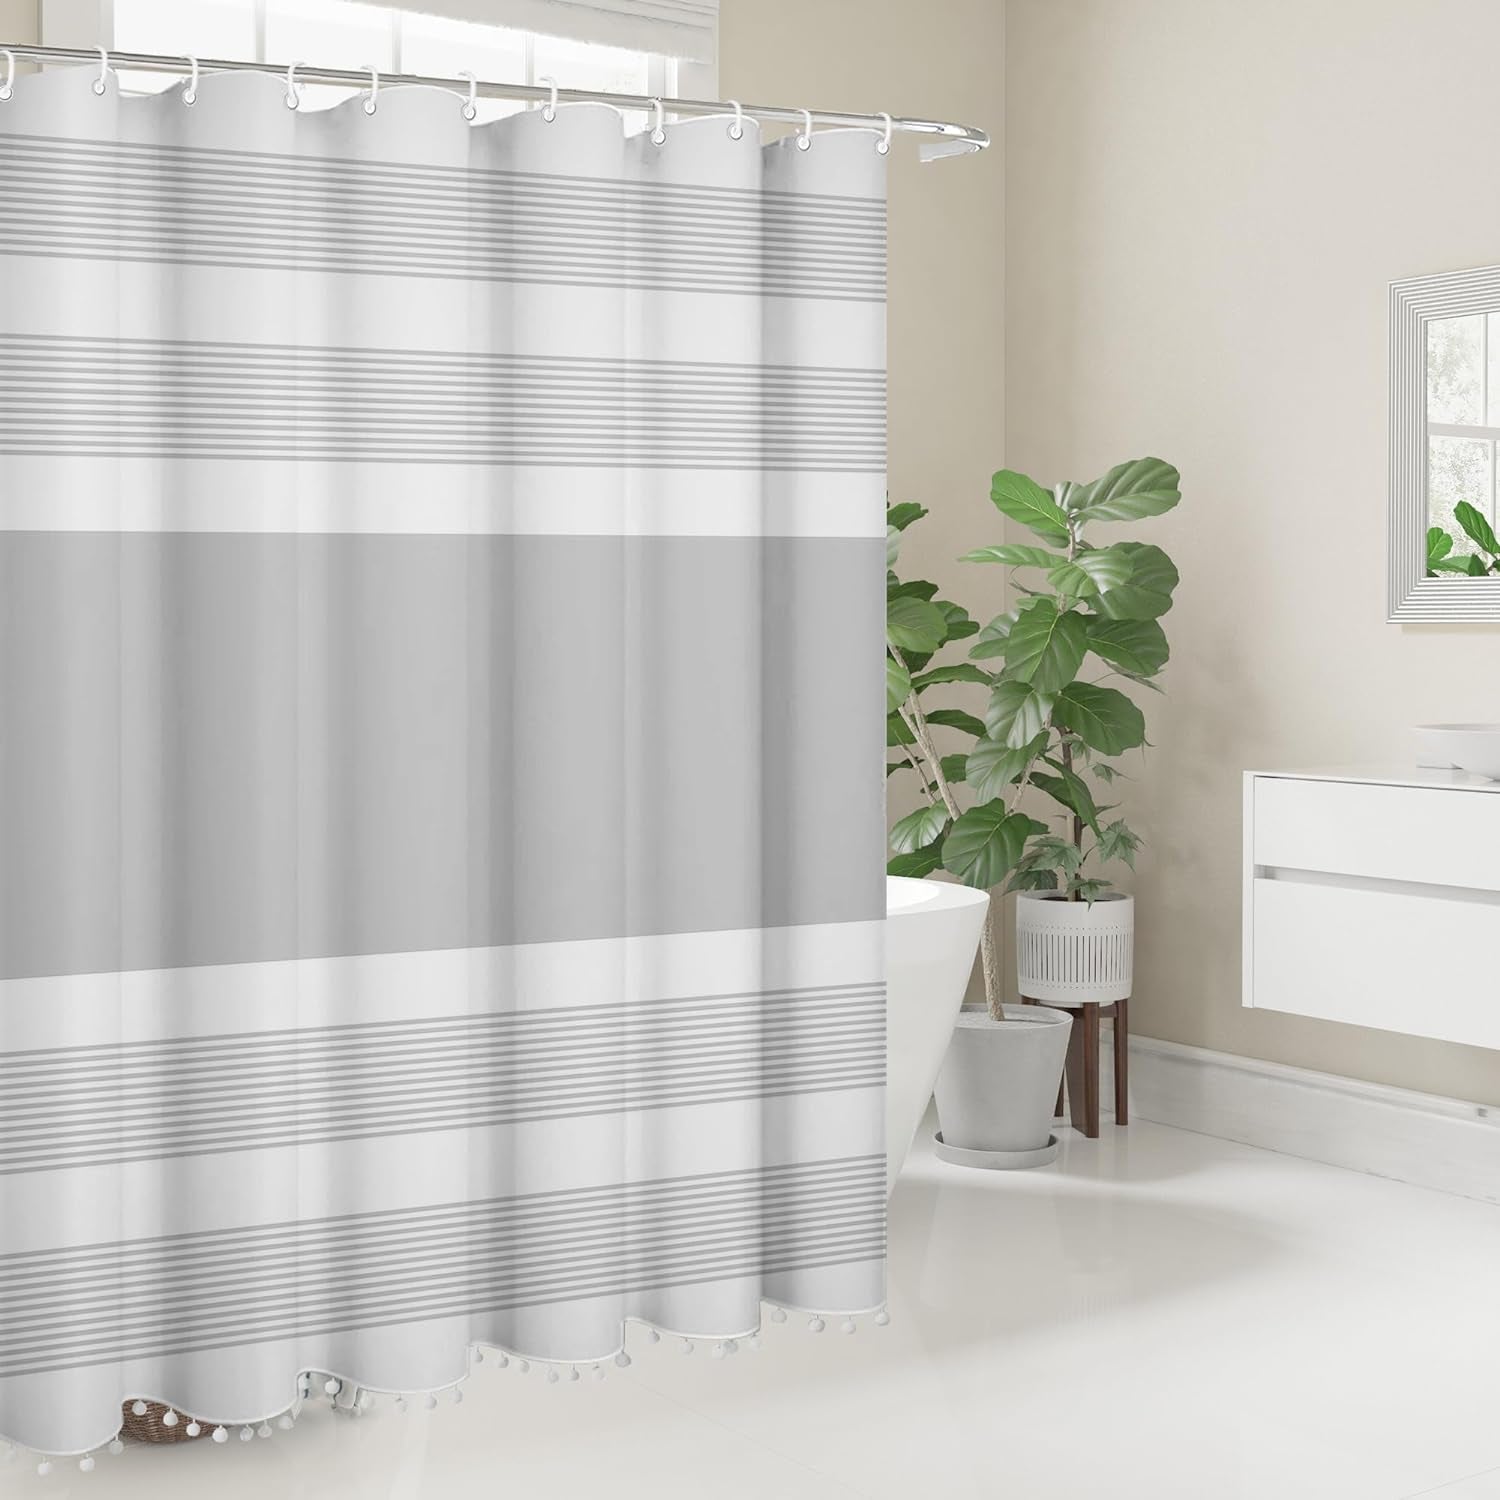 72"X72" Luxury Fabric Farmhouse Grey Shower Curtain Gray with Pompom Linen Boho Modern Classics Striped Curtains for Bathroom